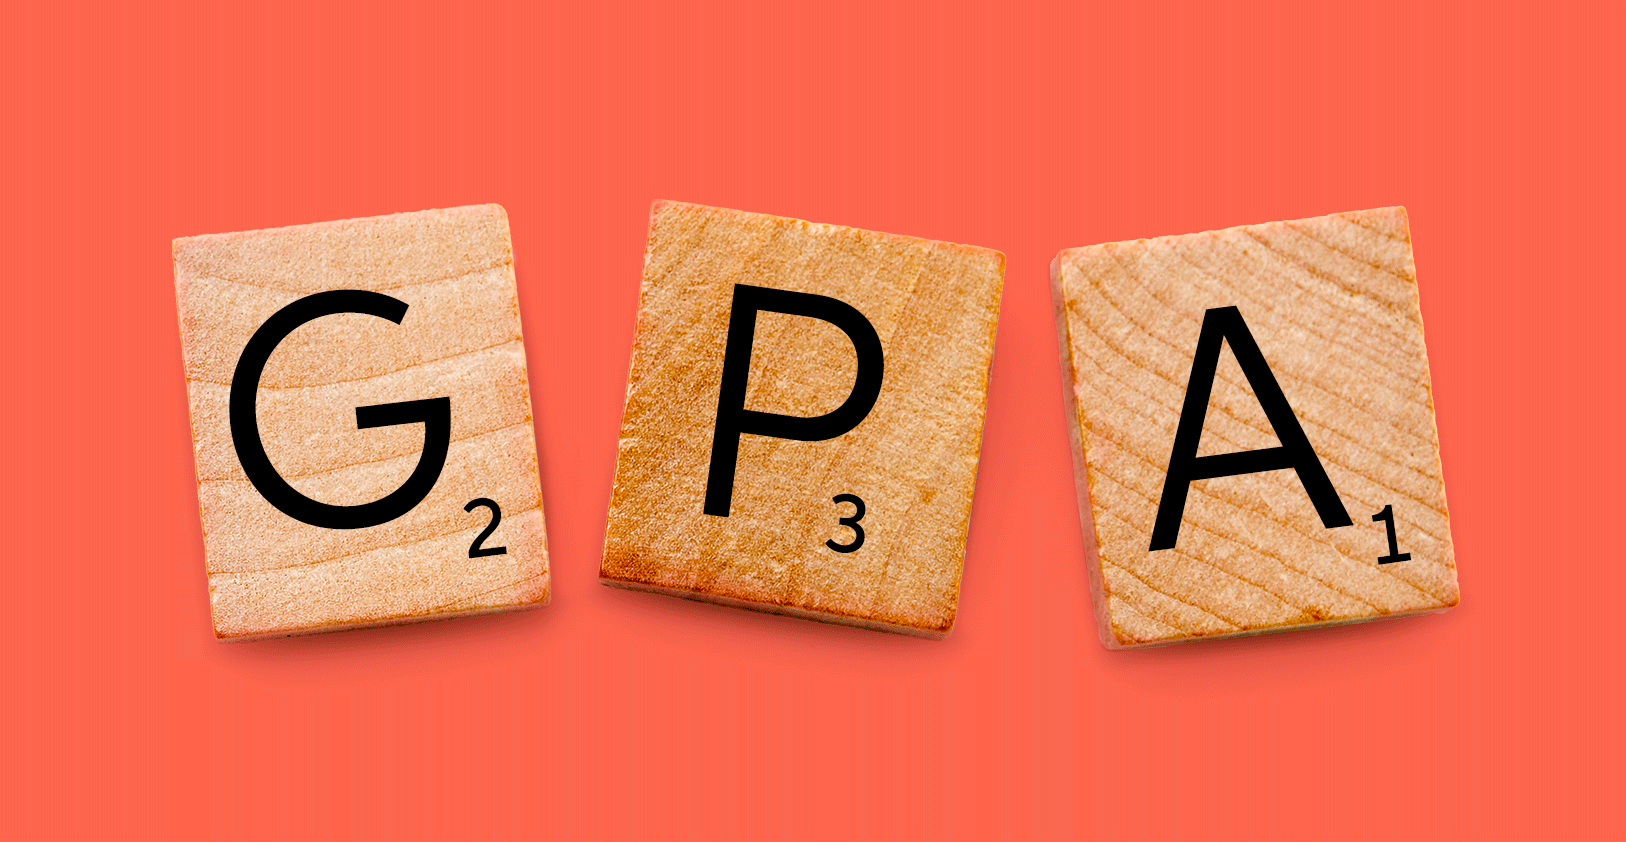 GPA là viết tắc của cụm từ Grade Point Average